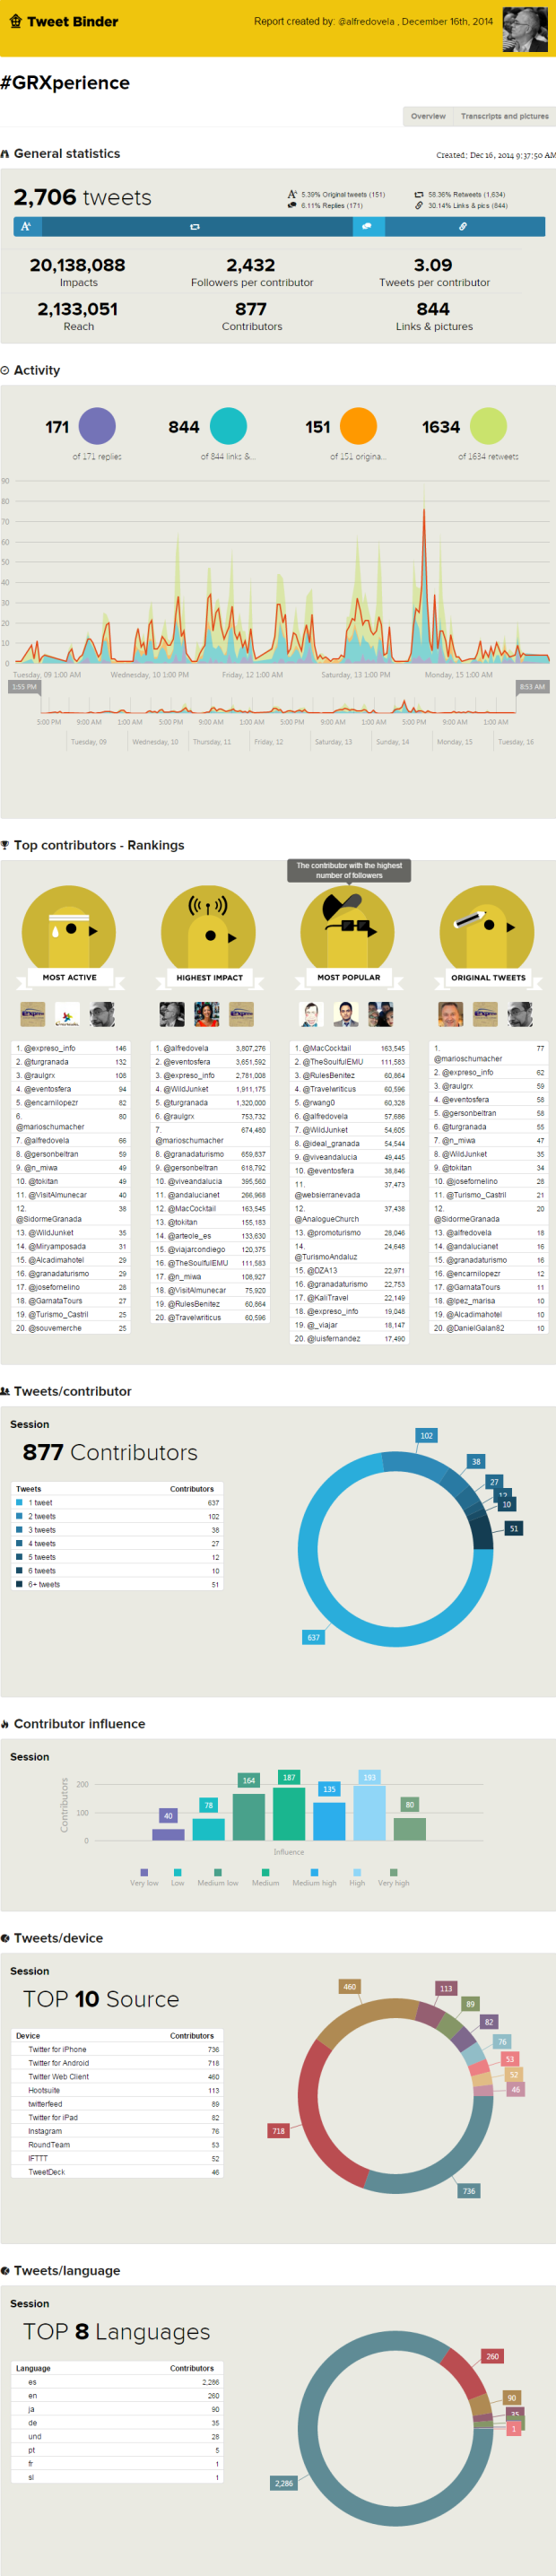 Estadísticas en Twitter del Blogtrip #GRXperience 2014